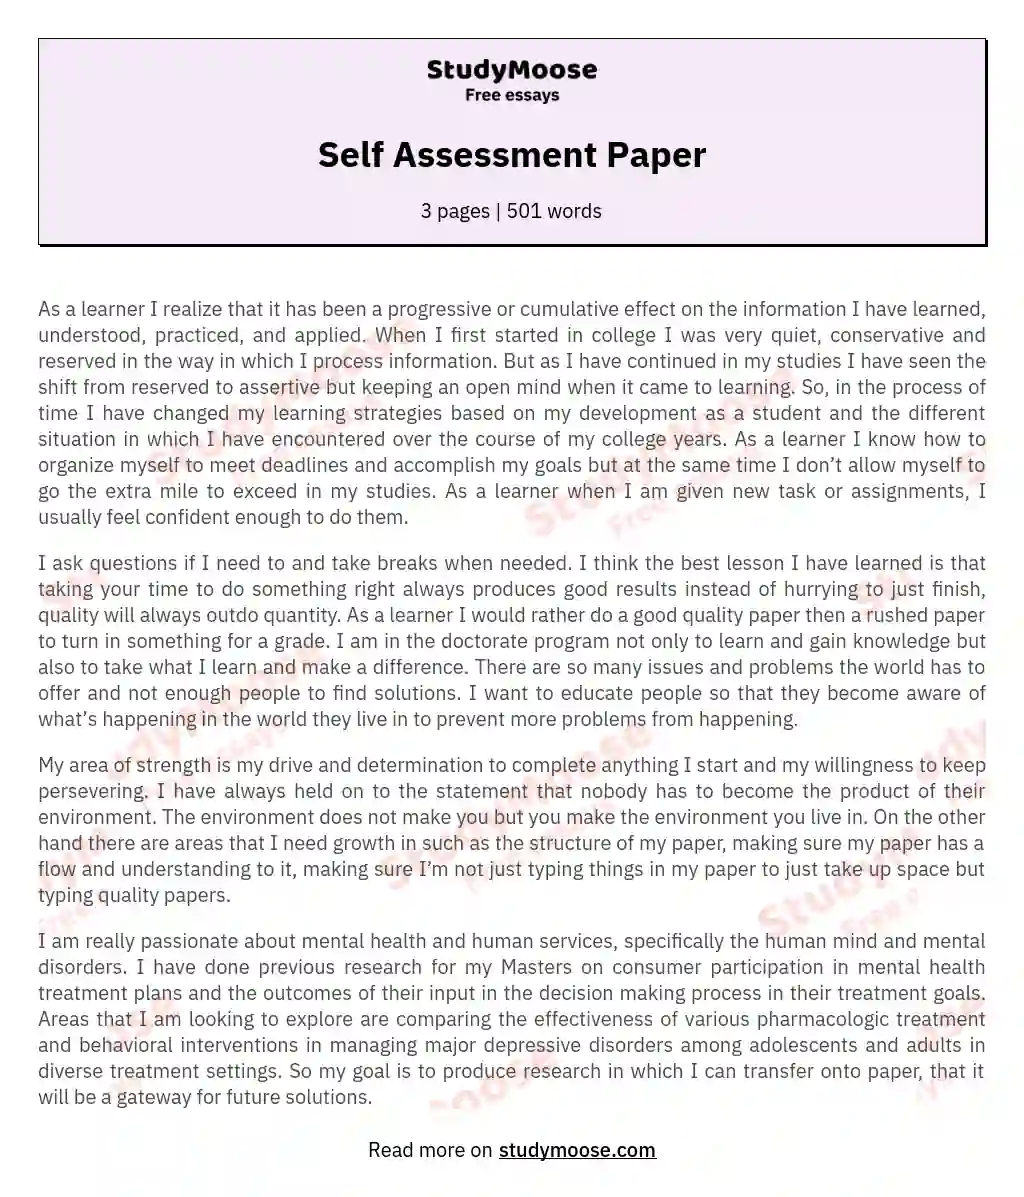 Self Assessment Paper essay